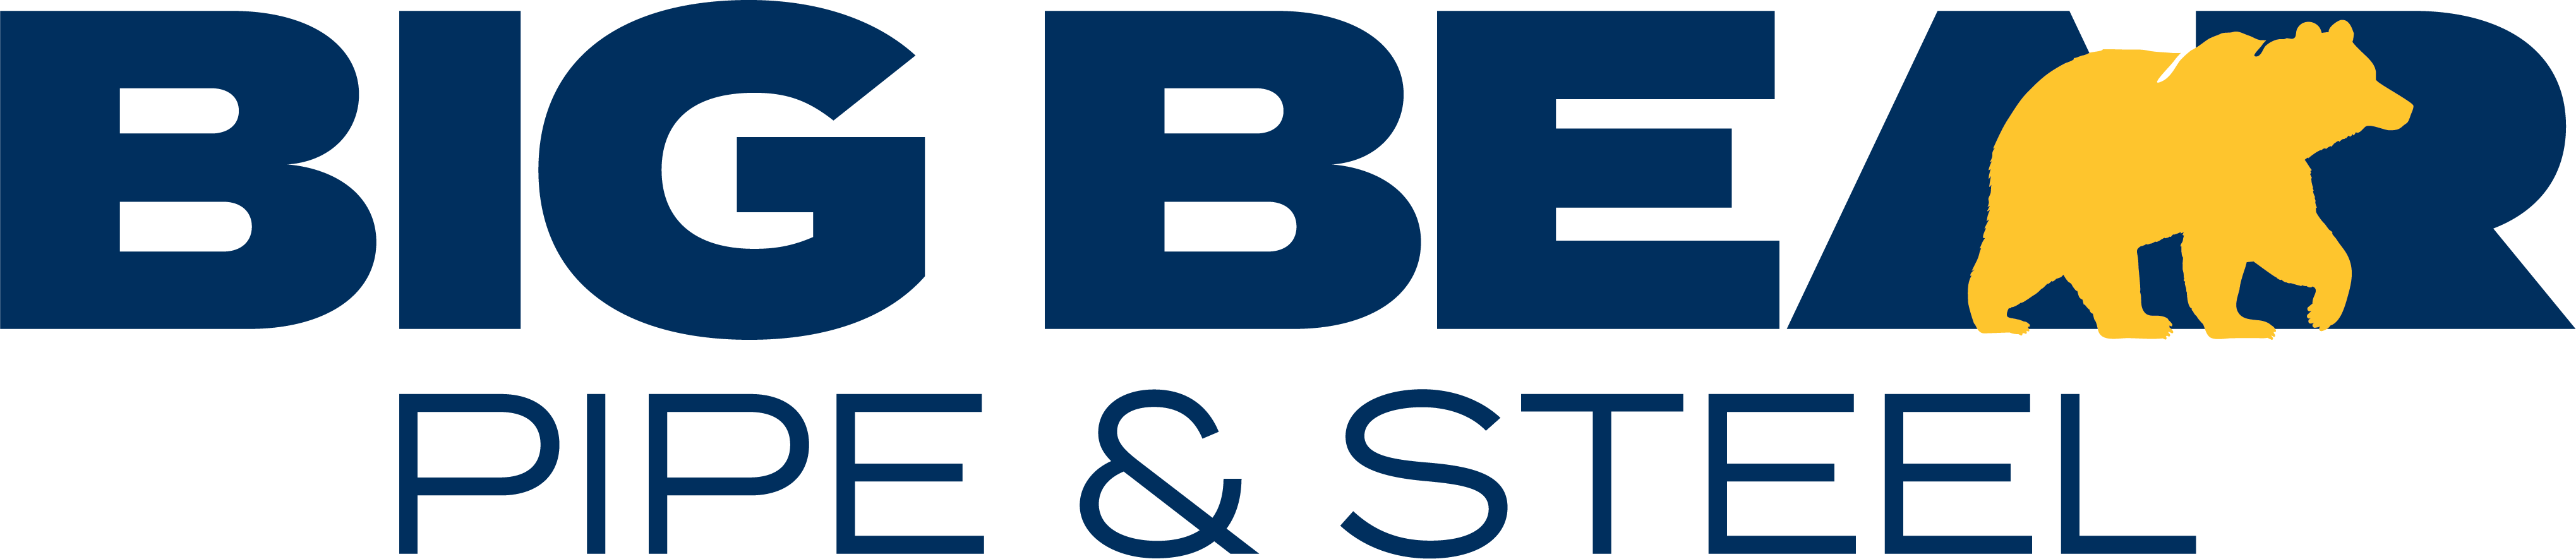 Big Bear Pipe & Steel logo